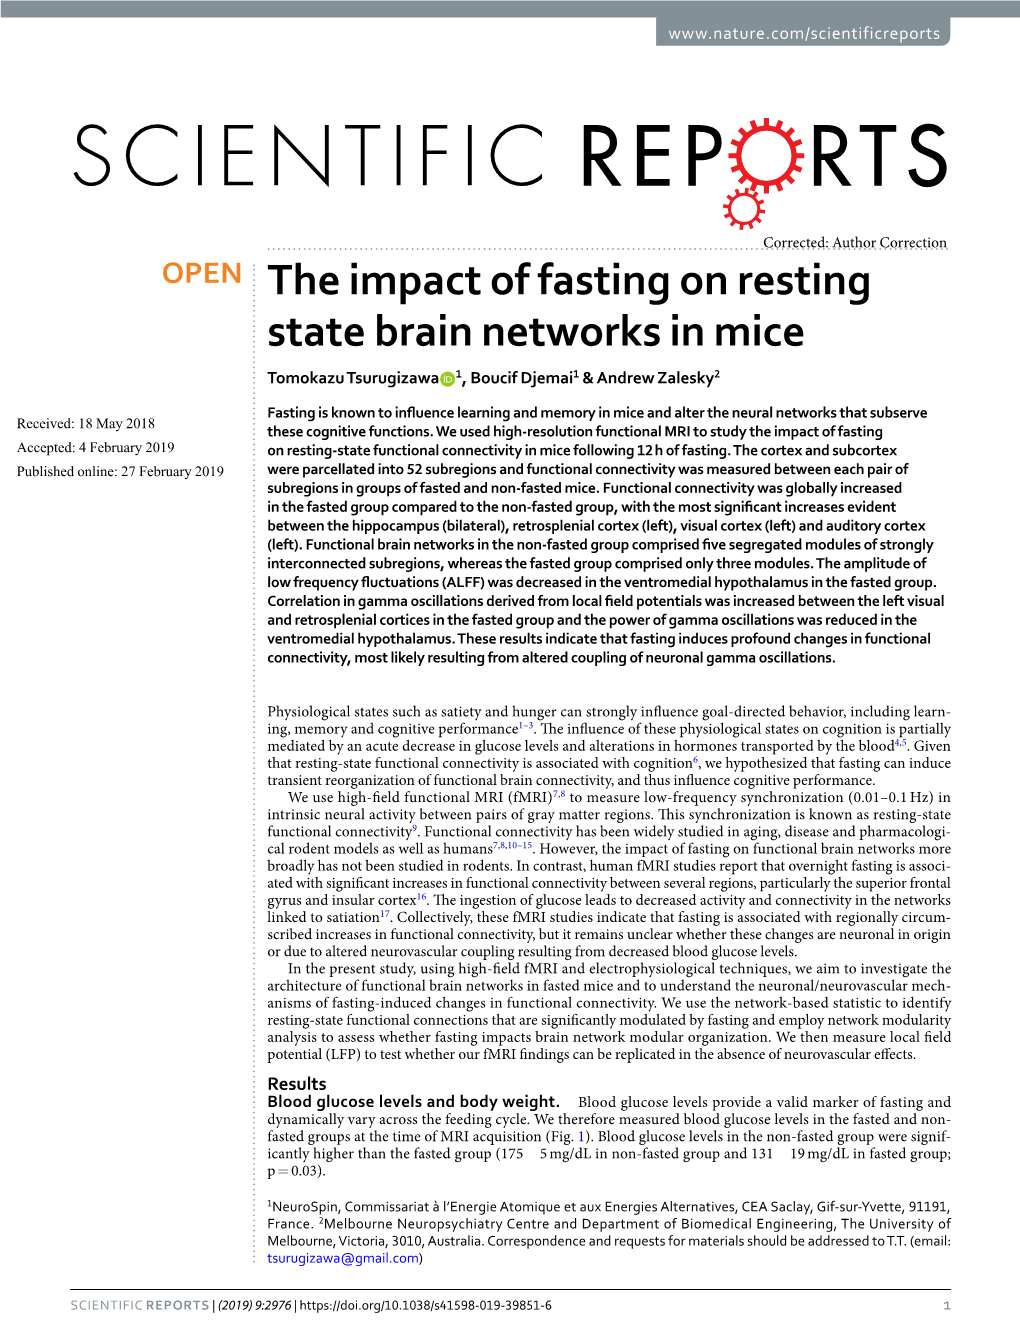 The Impact of Fasting on Resting State Brain Networks in Mice Tomokazu Tsurugizawa 1, Boucif Djemai1 & Andrew Zalesky2